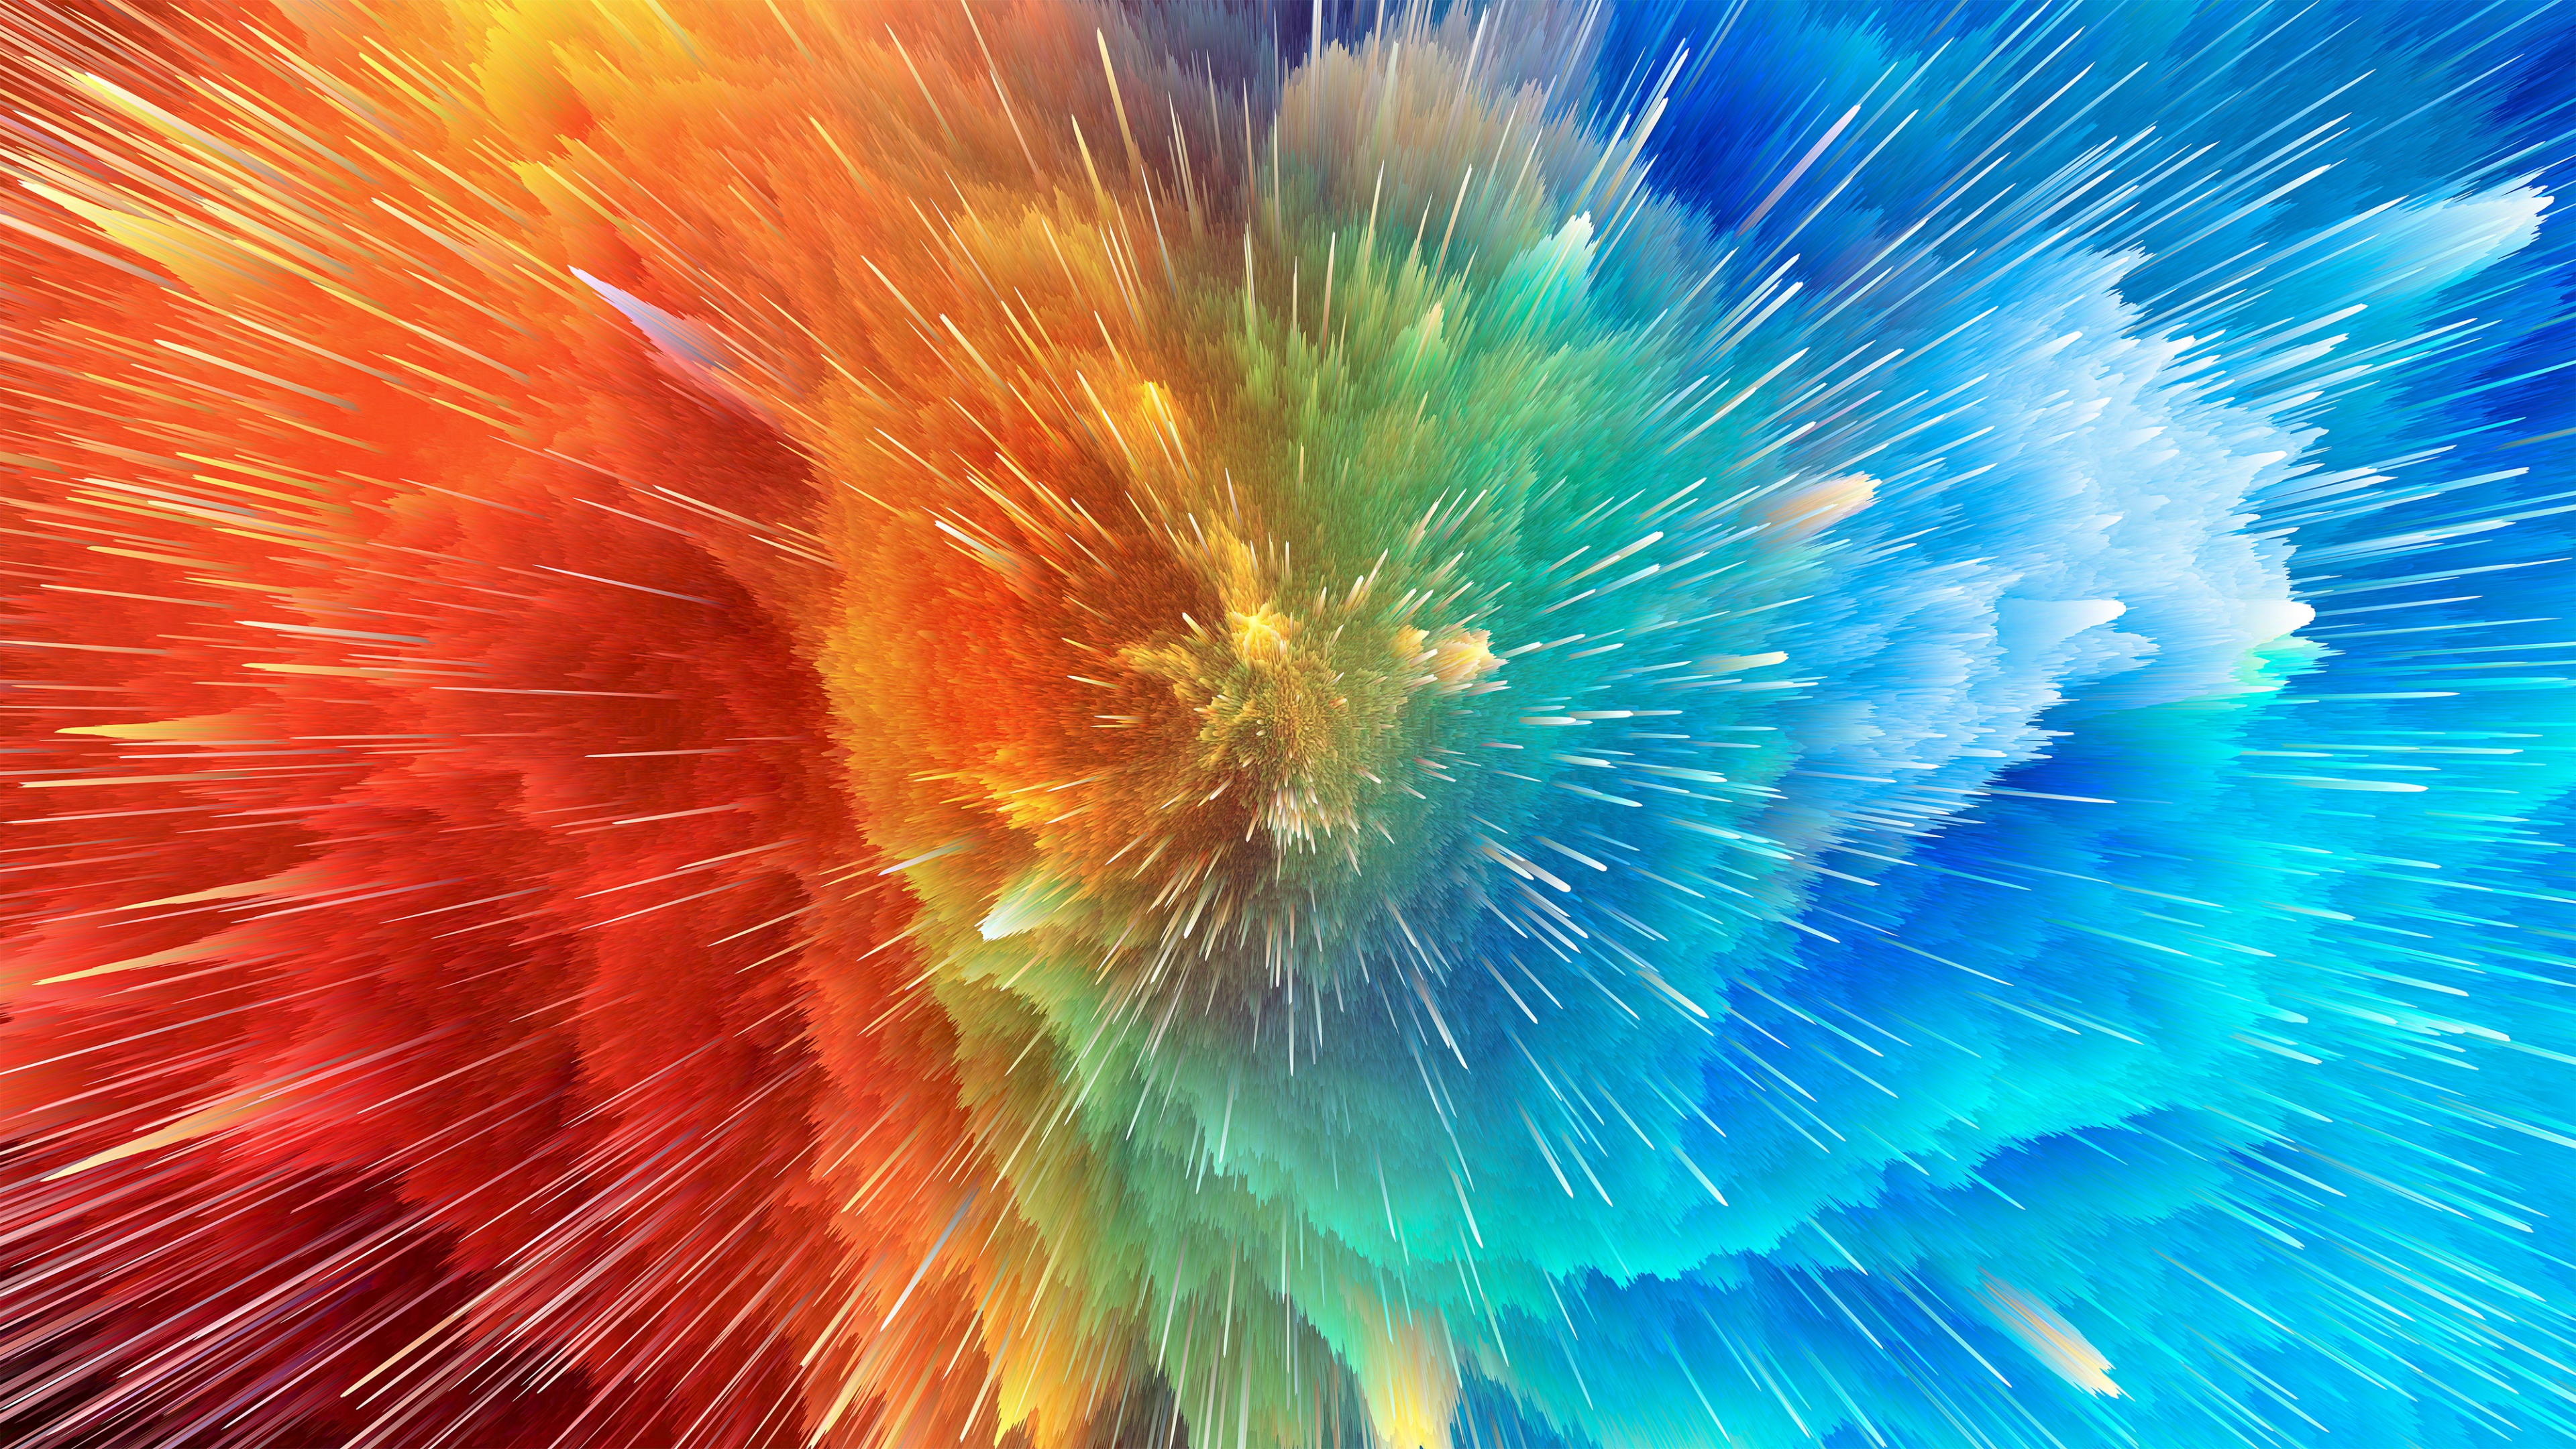 4K Color Explosion 